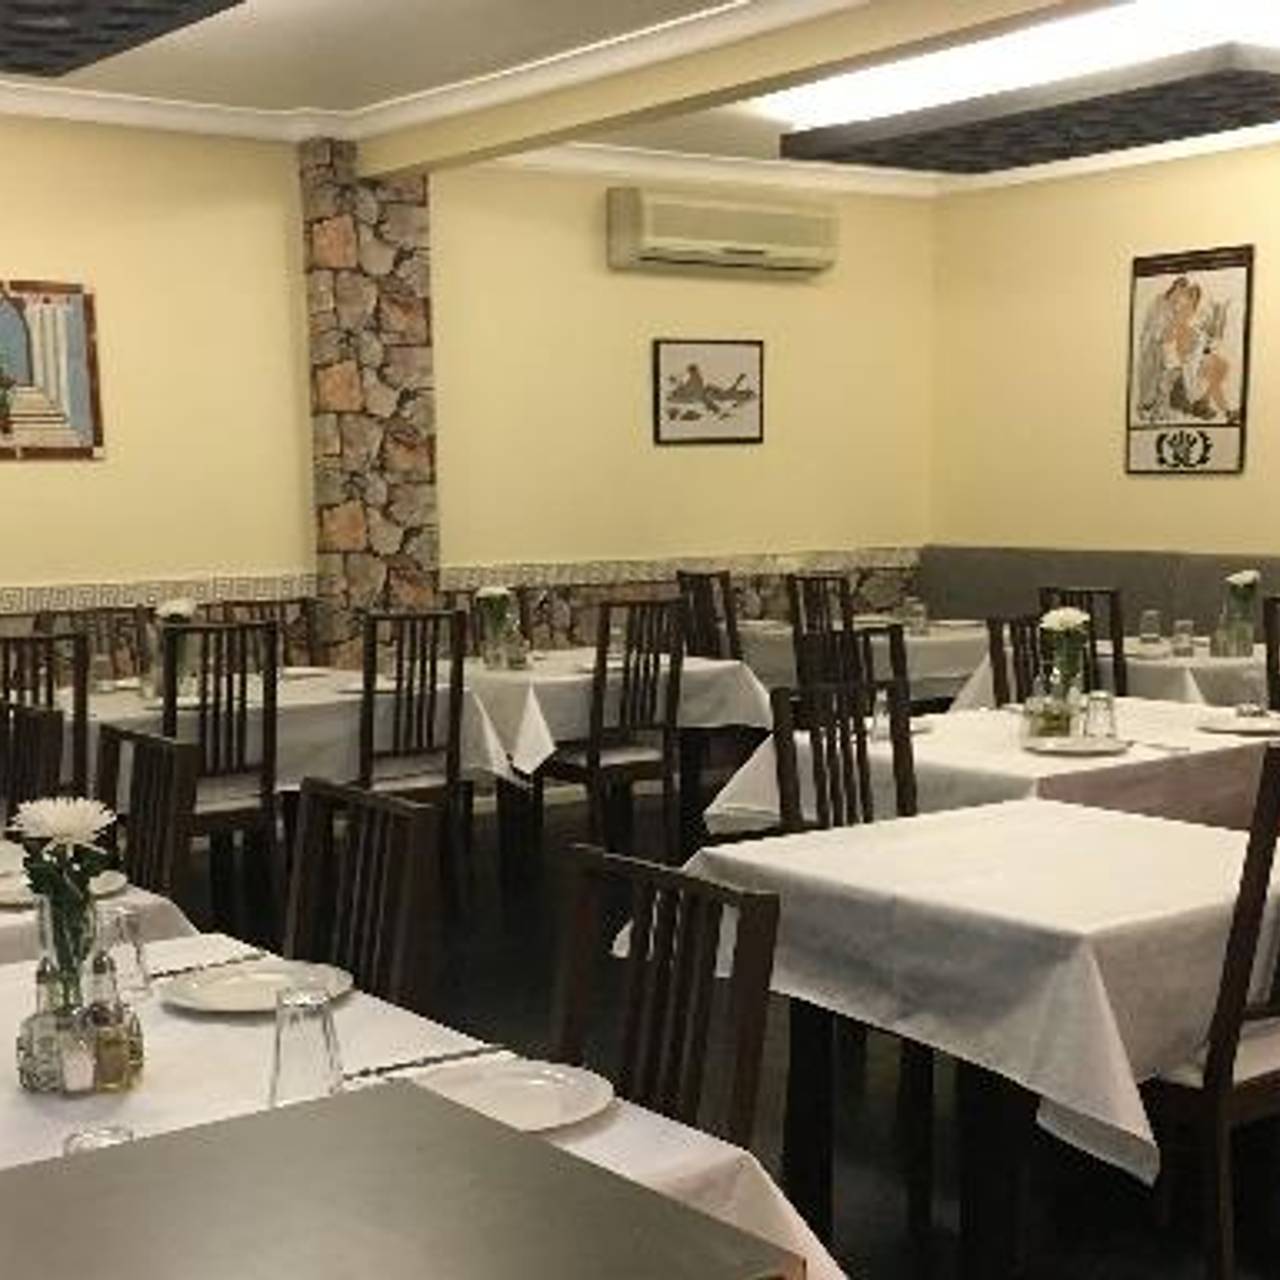 The Great Taste Of Greece Restaurant - Sydney, NSW | OpenTable